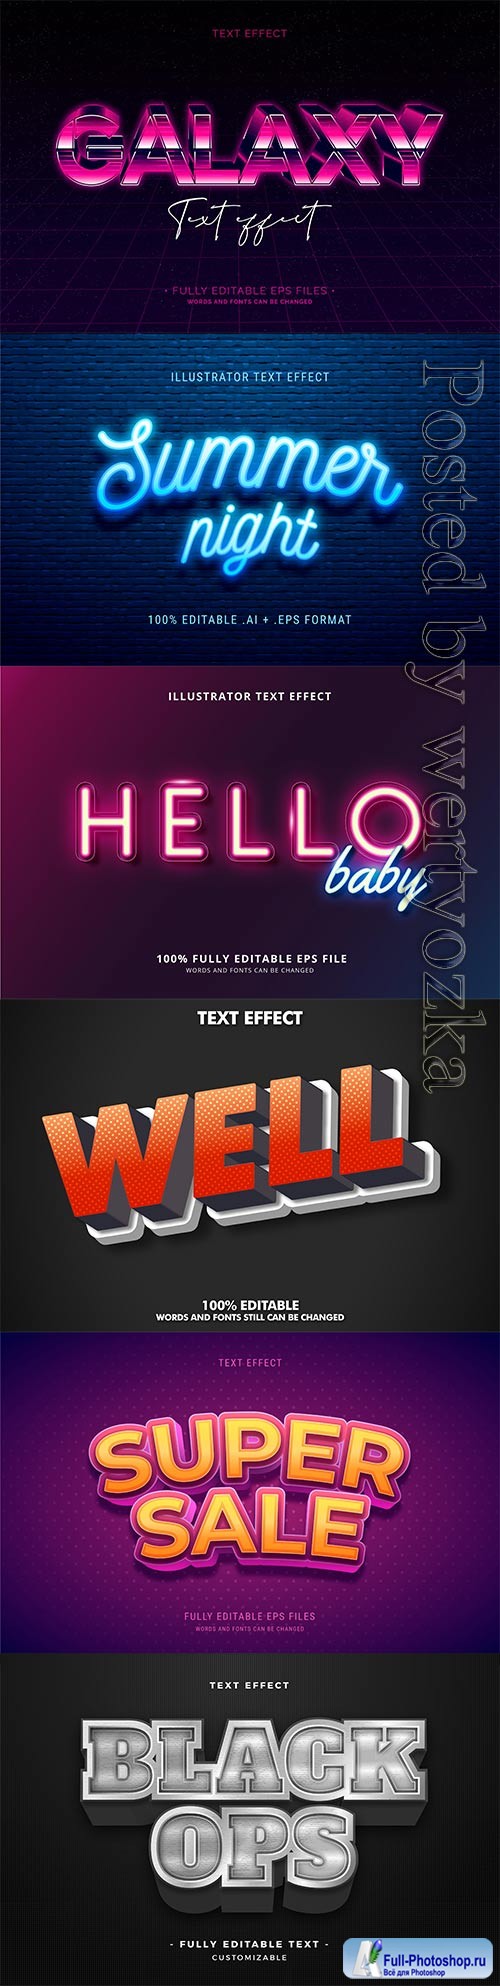 3d editable text style effect vector vol 356